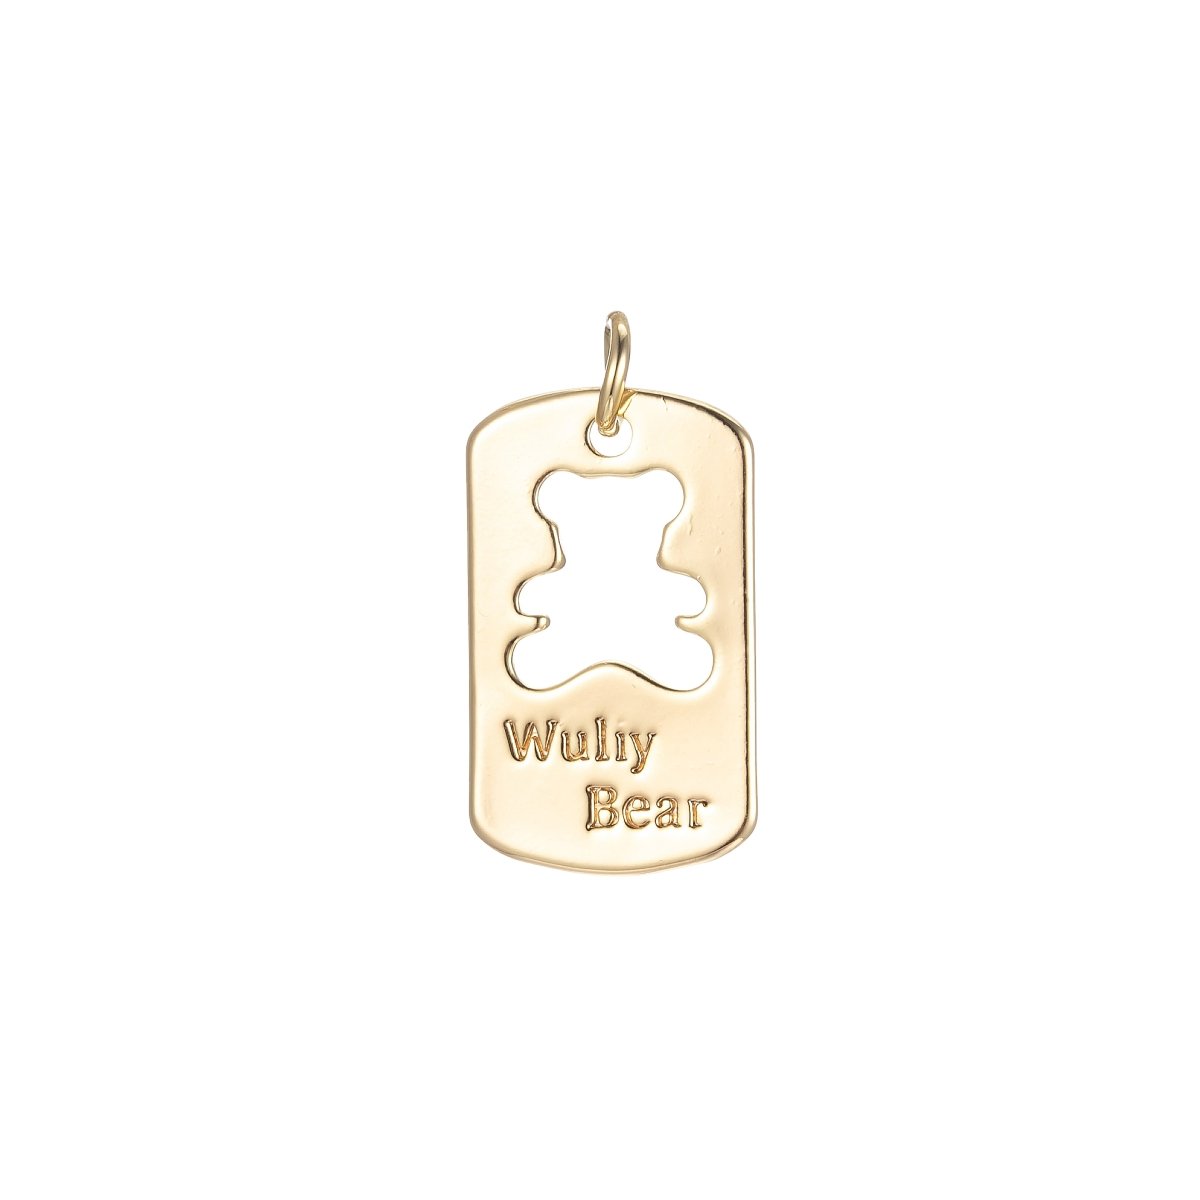 Tag Gold Bear Charm Teddy Bear Charm Necklace Pendant / Bracelet / Earrings / Kids Crafts Jewelry Supply E-865 - DLUXCA